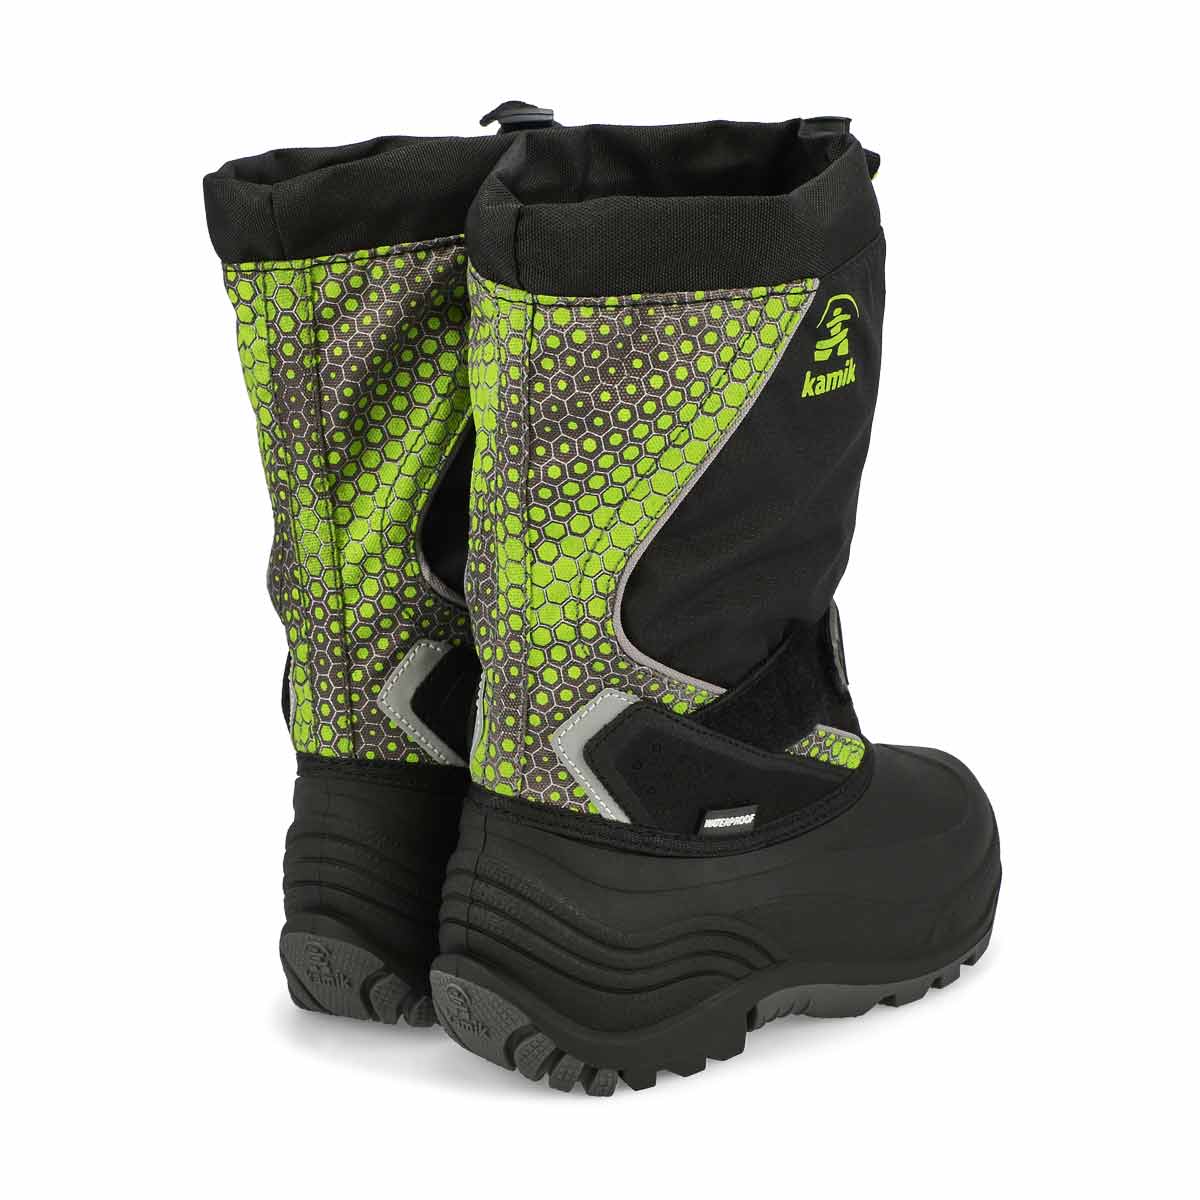 Boys' Snowfall P Waterproof Winter Boot